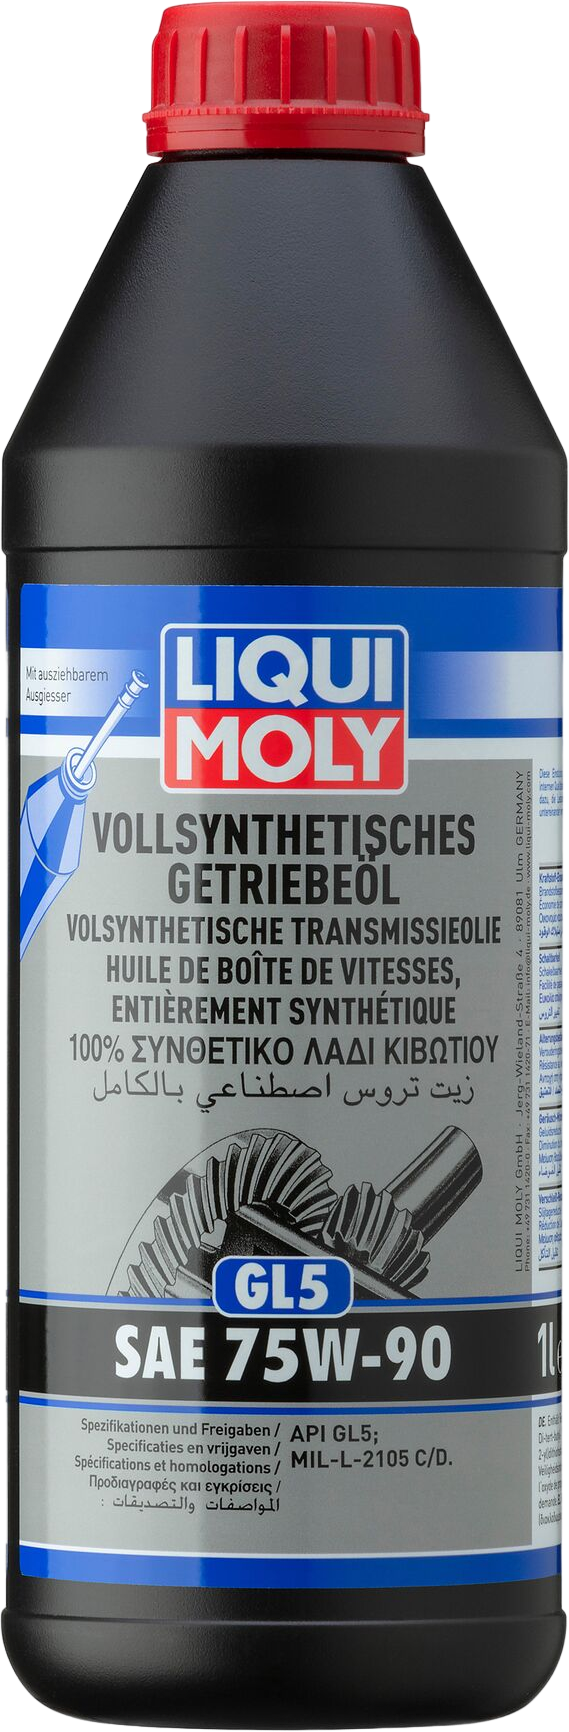 Liqui Moly Volsynthetische transmissieolie (GL5) SAE 75W-90, 6 x 1 lt detail 2